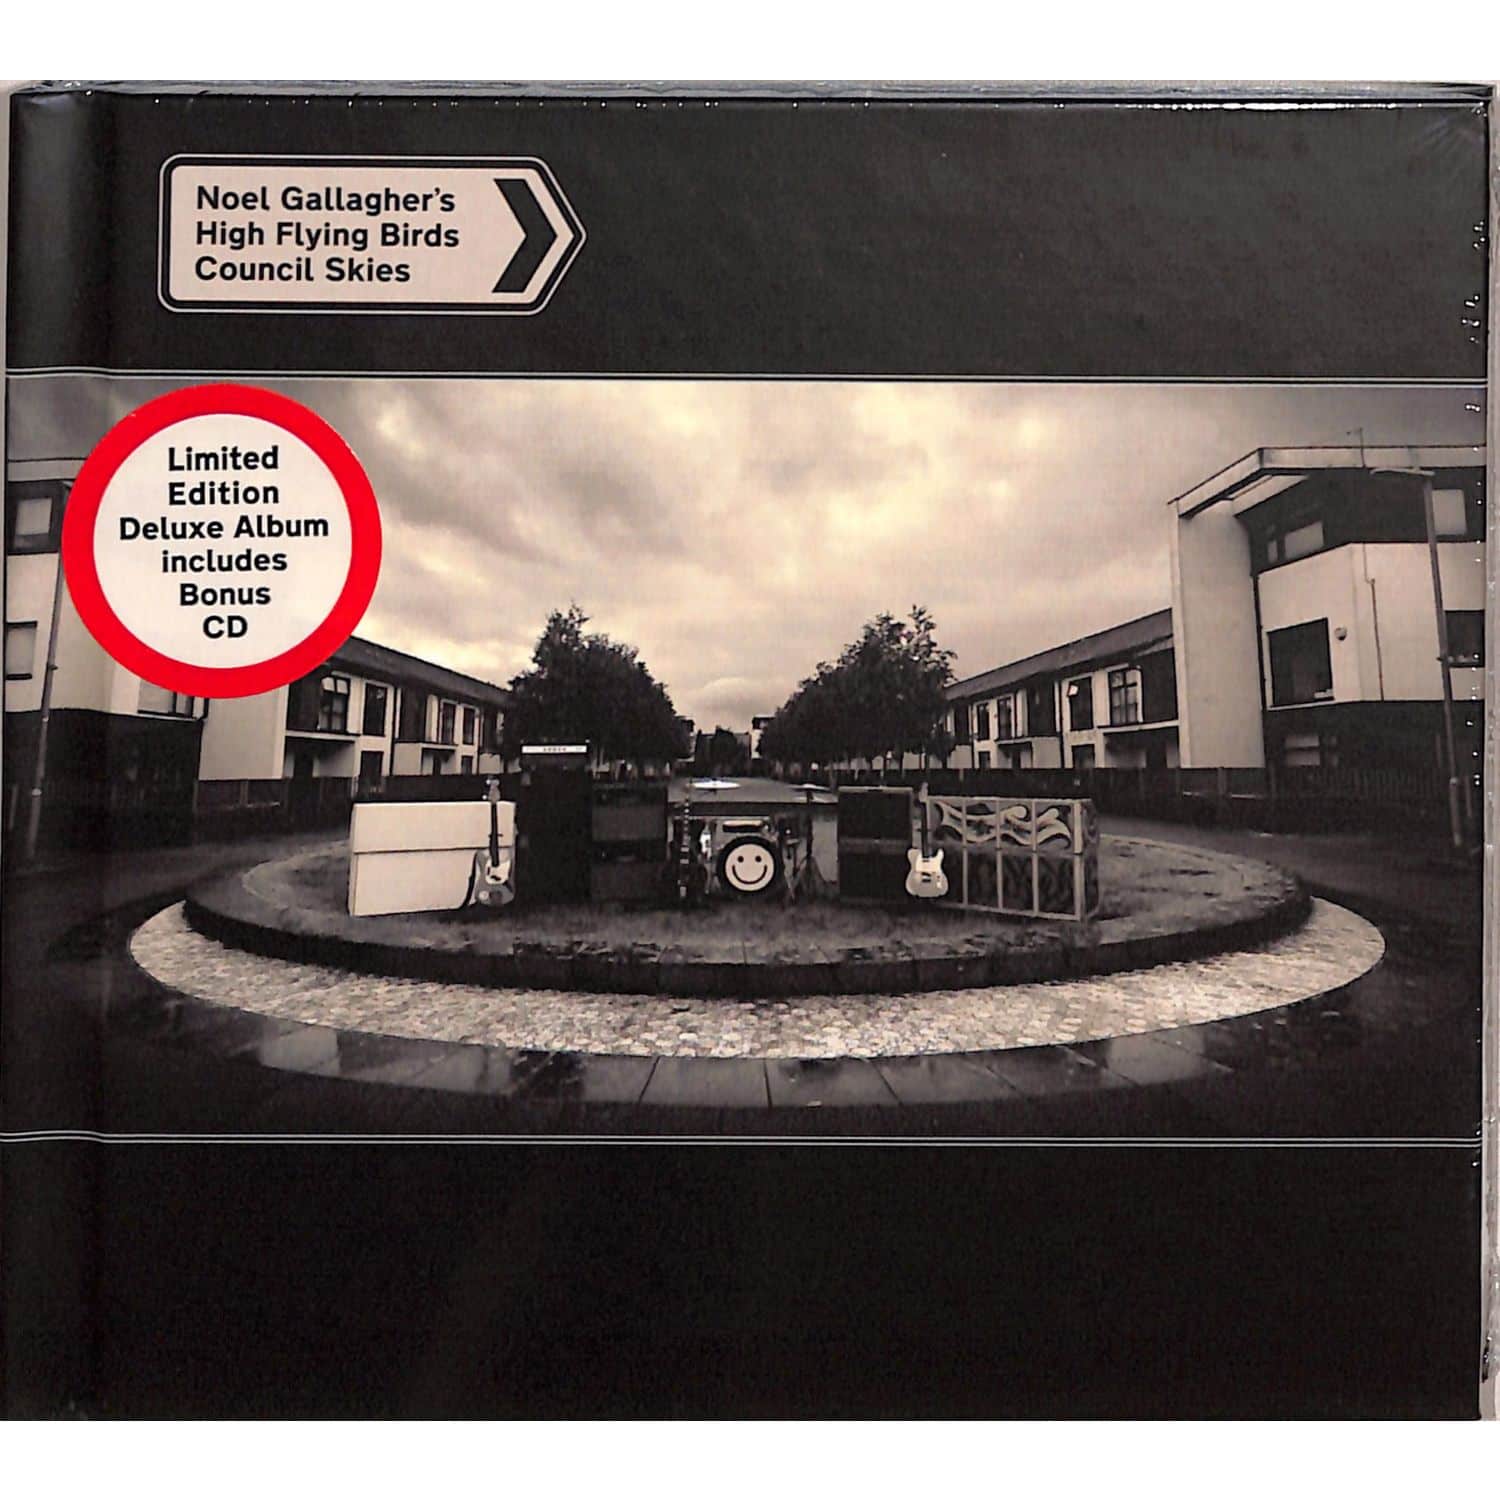 Noel Gallagher / High Flying Birds - COUNCIL SKIES 